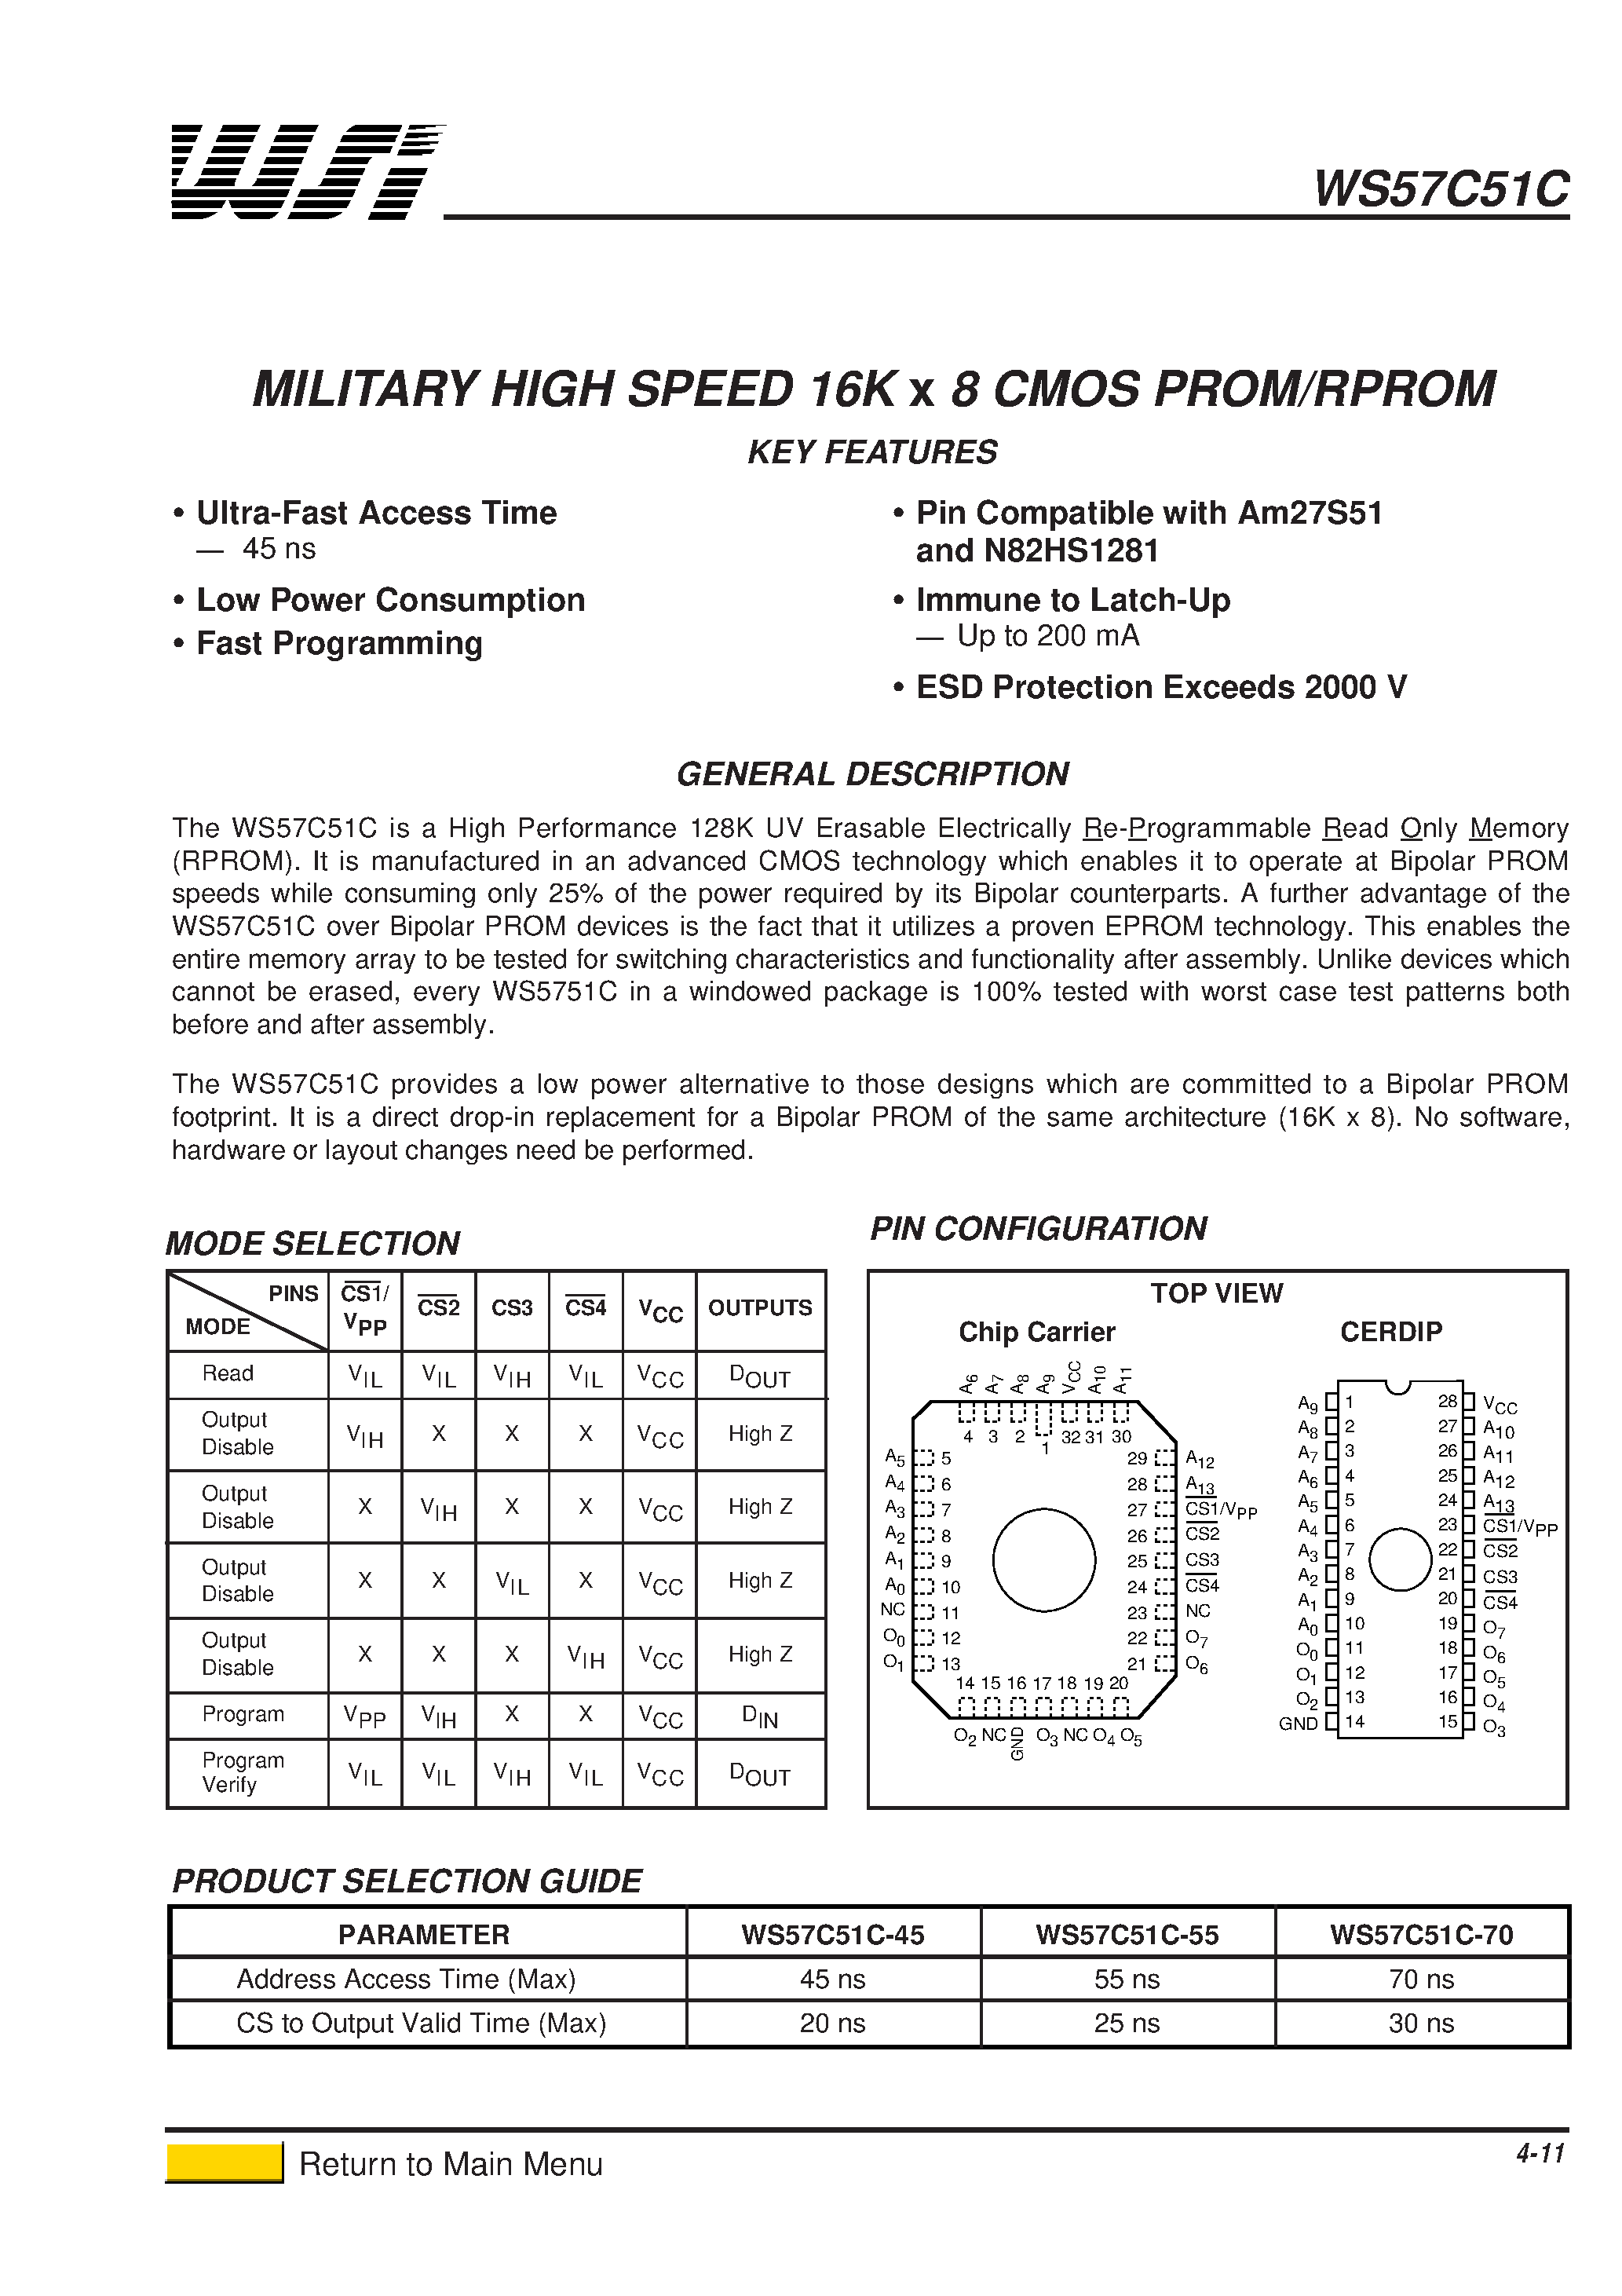 Даташит WS57C51C-1 - MILITARY HIGH SPEED 16K x 8 CMOS PROM/RPROM страница 1